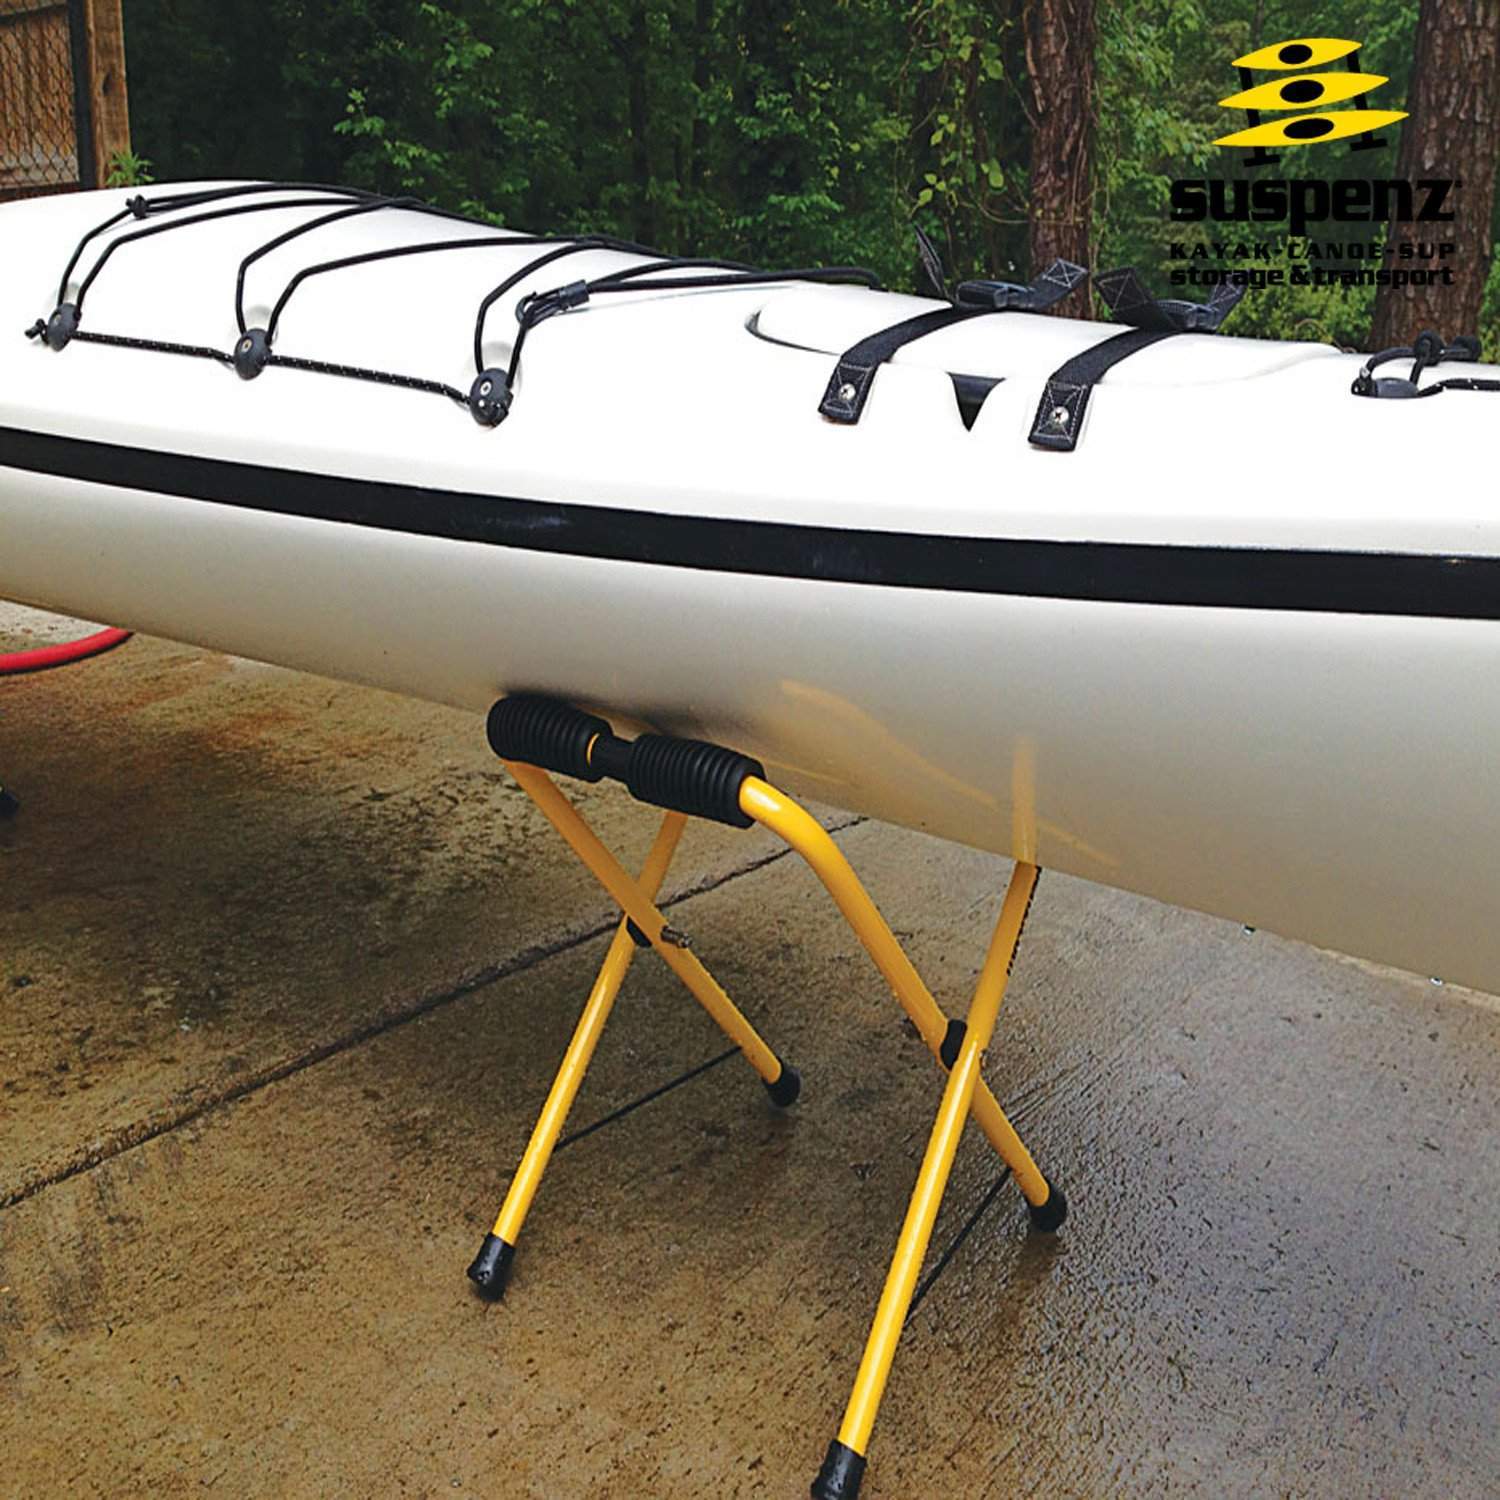 Universal Portable Boat Stands | Canoe & Kayak Stand | Suspenz